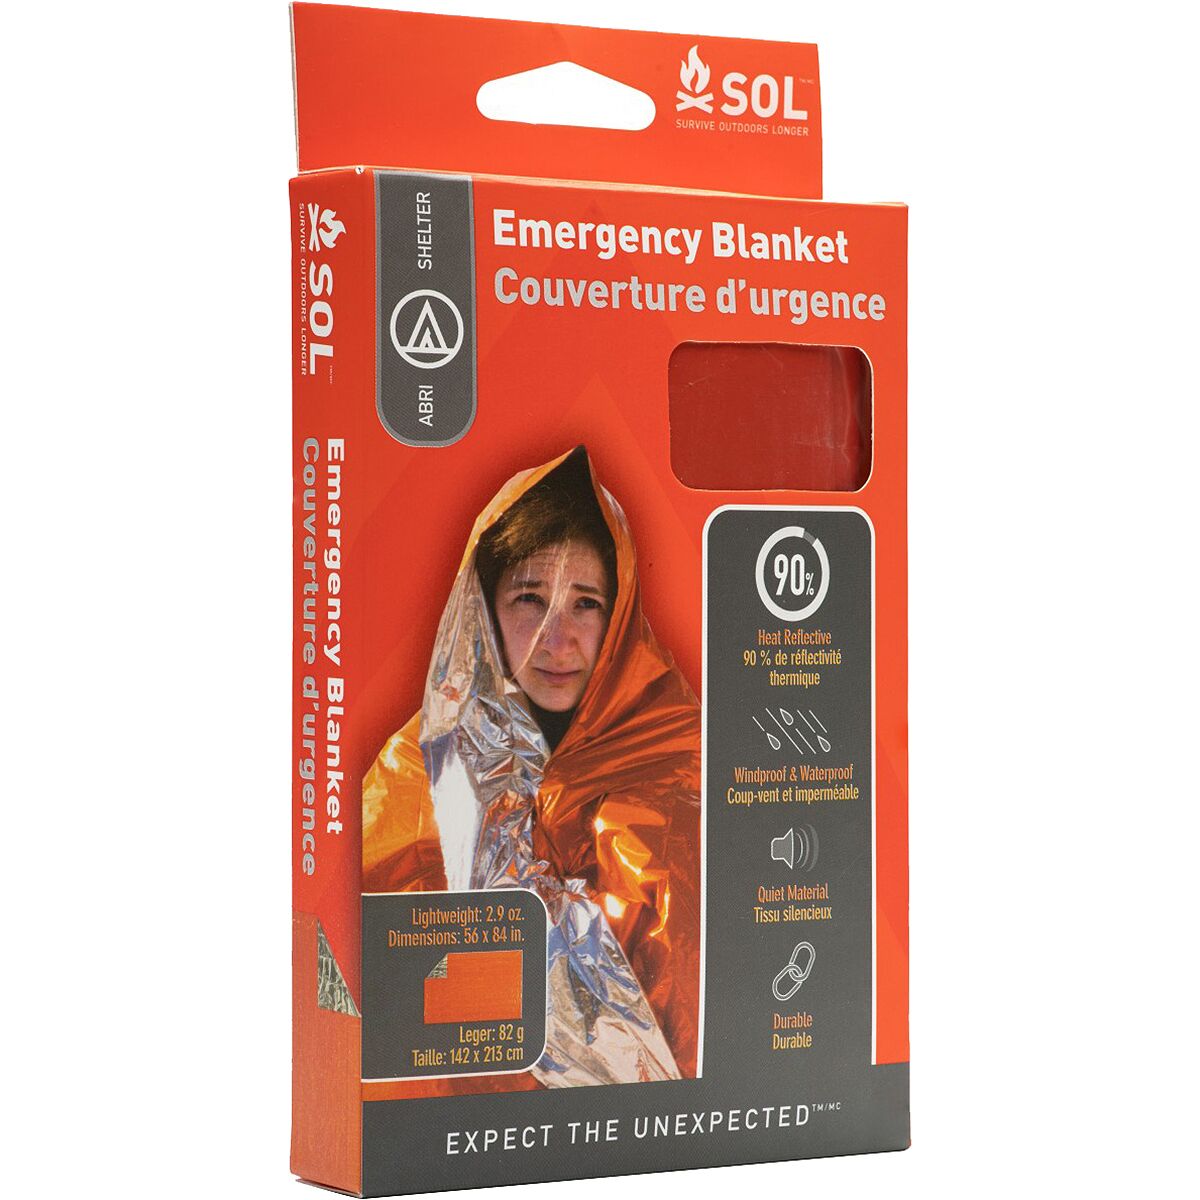 S.O.L Survive Outdoors Longer Emergency Blanket